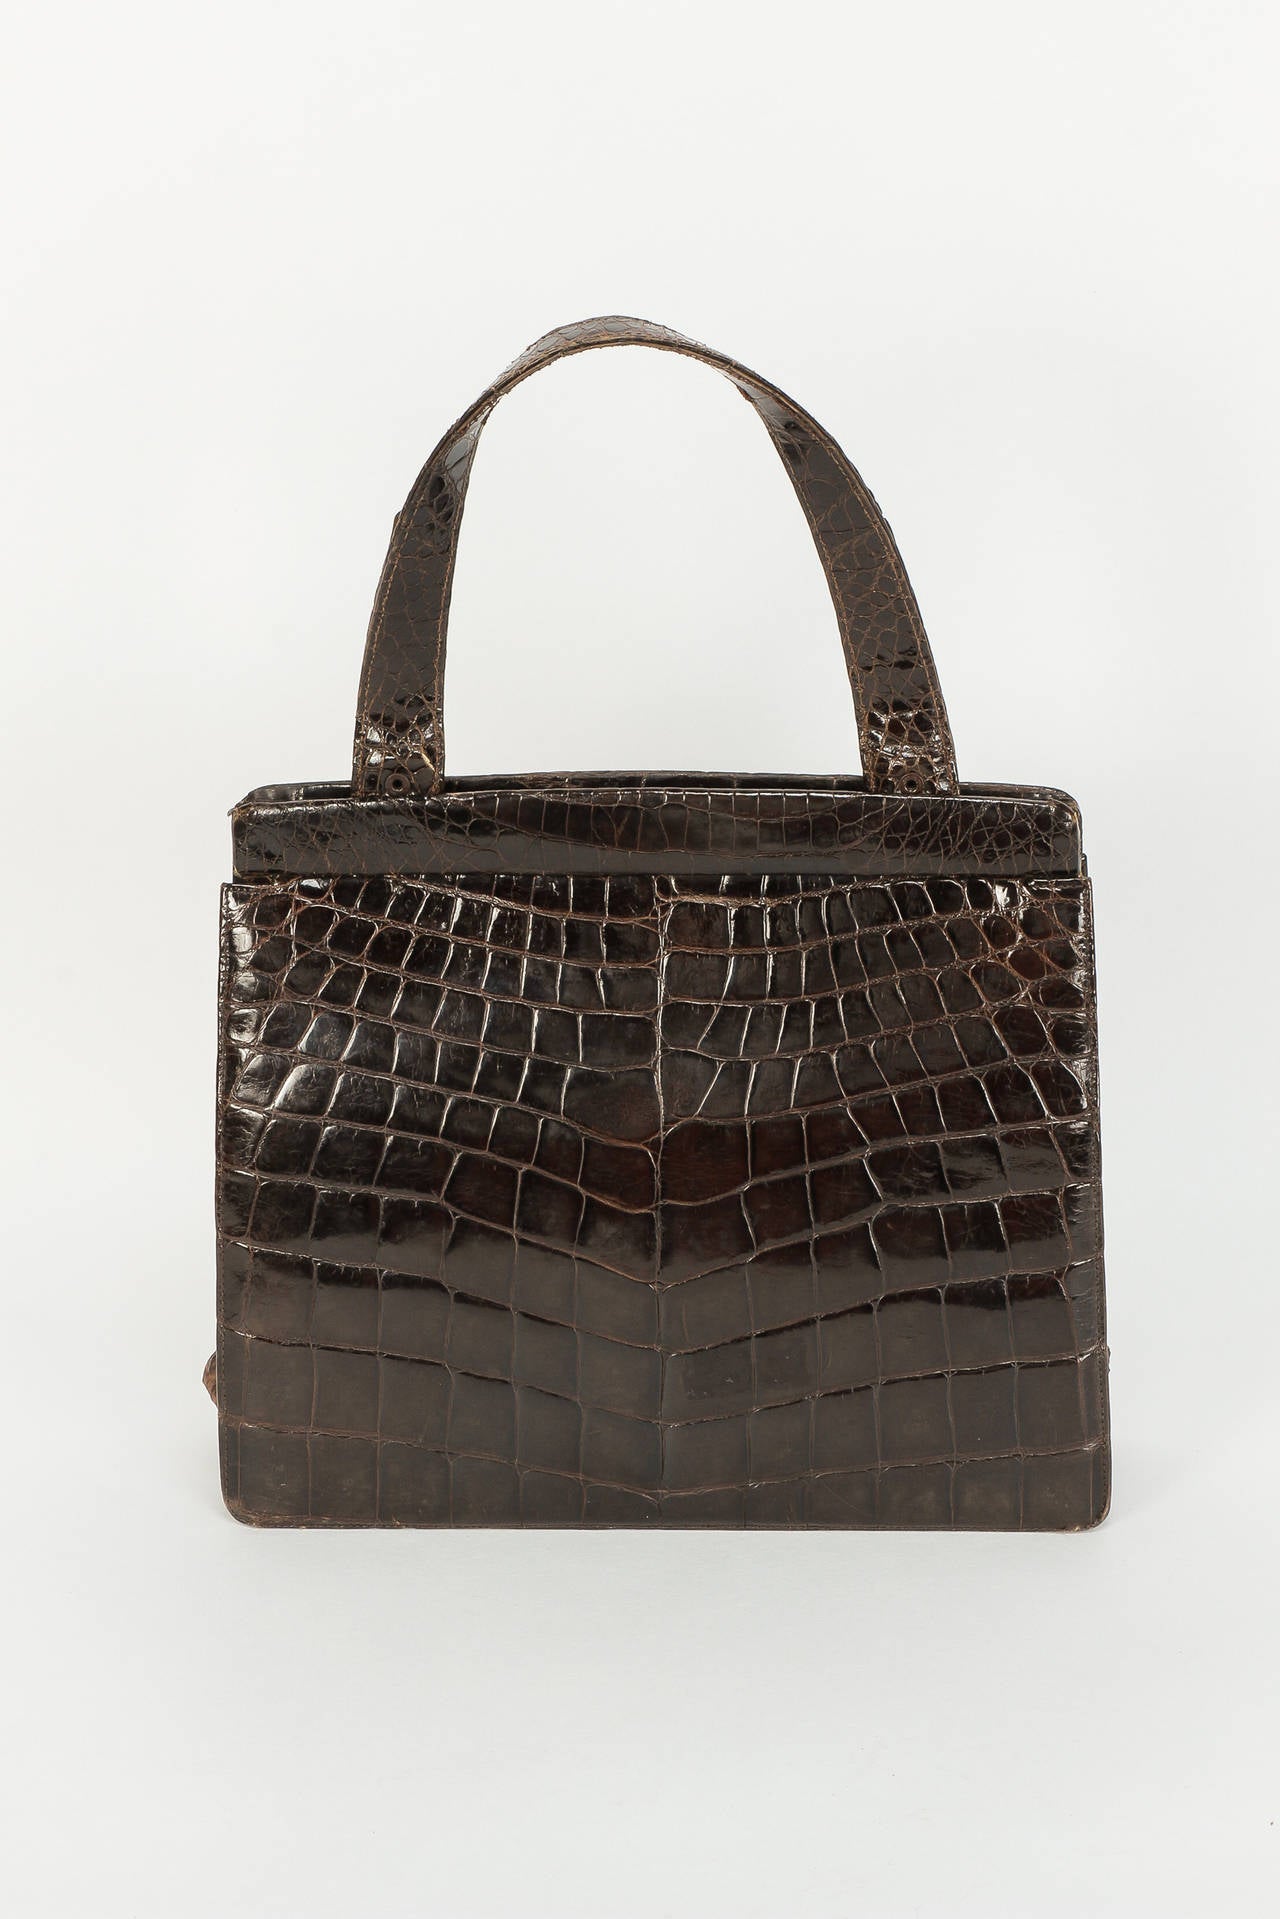 Mid-Century Modern Real Alligator Leather Handbag Purse, 1940s For Sale